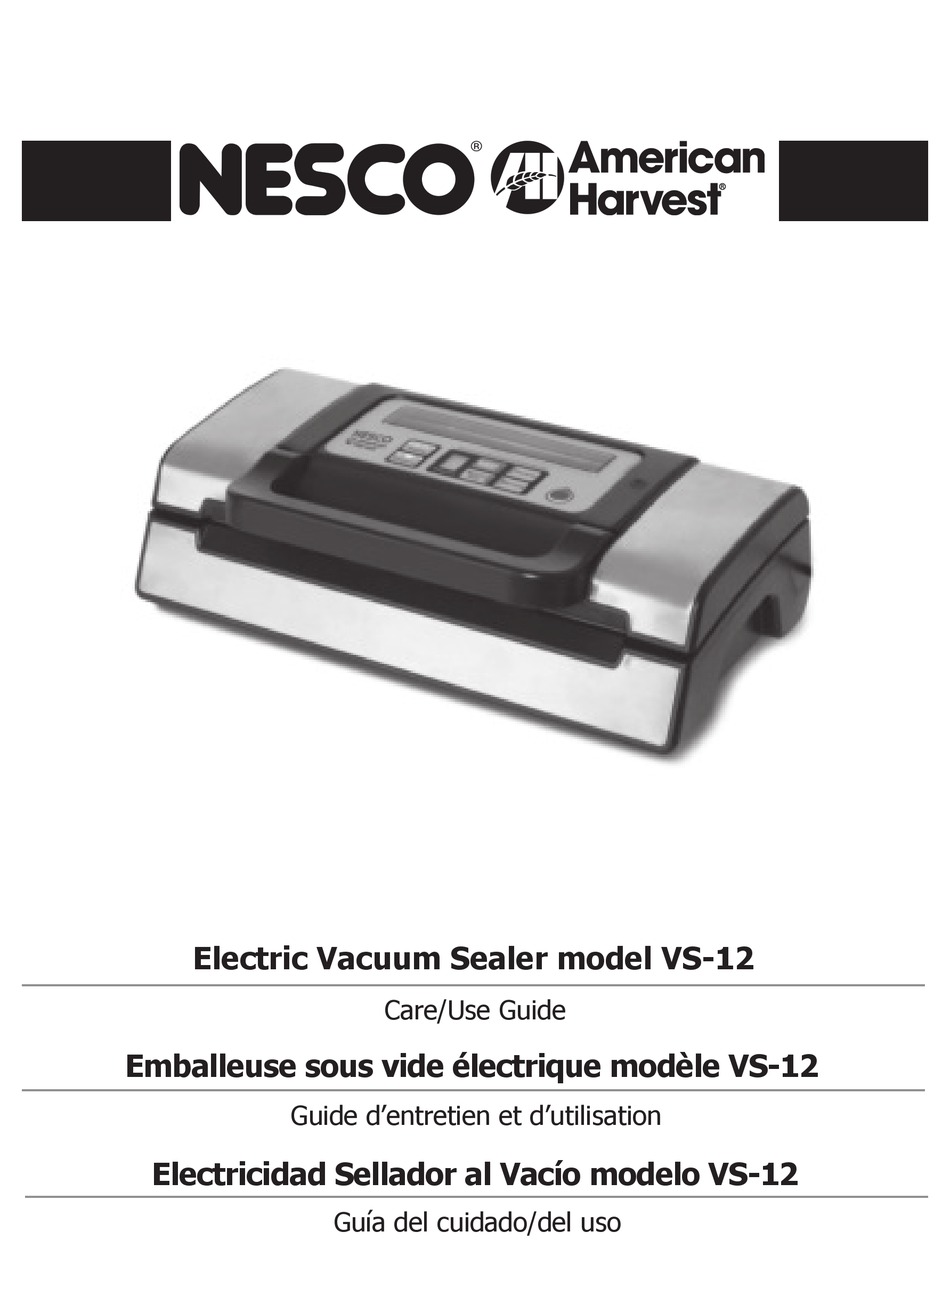 NESCO VS-12 CARE/USE MANUAL Pdf Download | ManualsLib